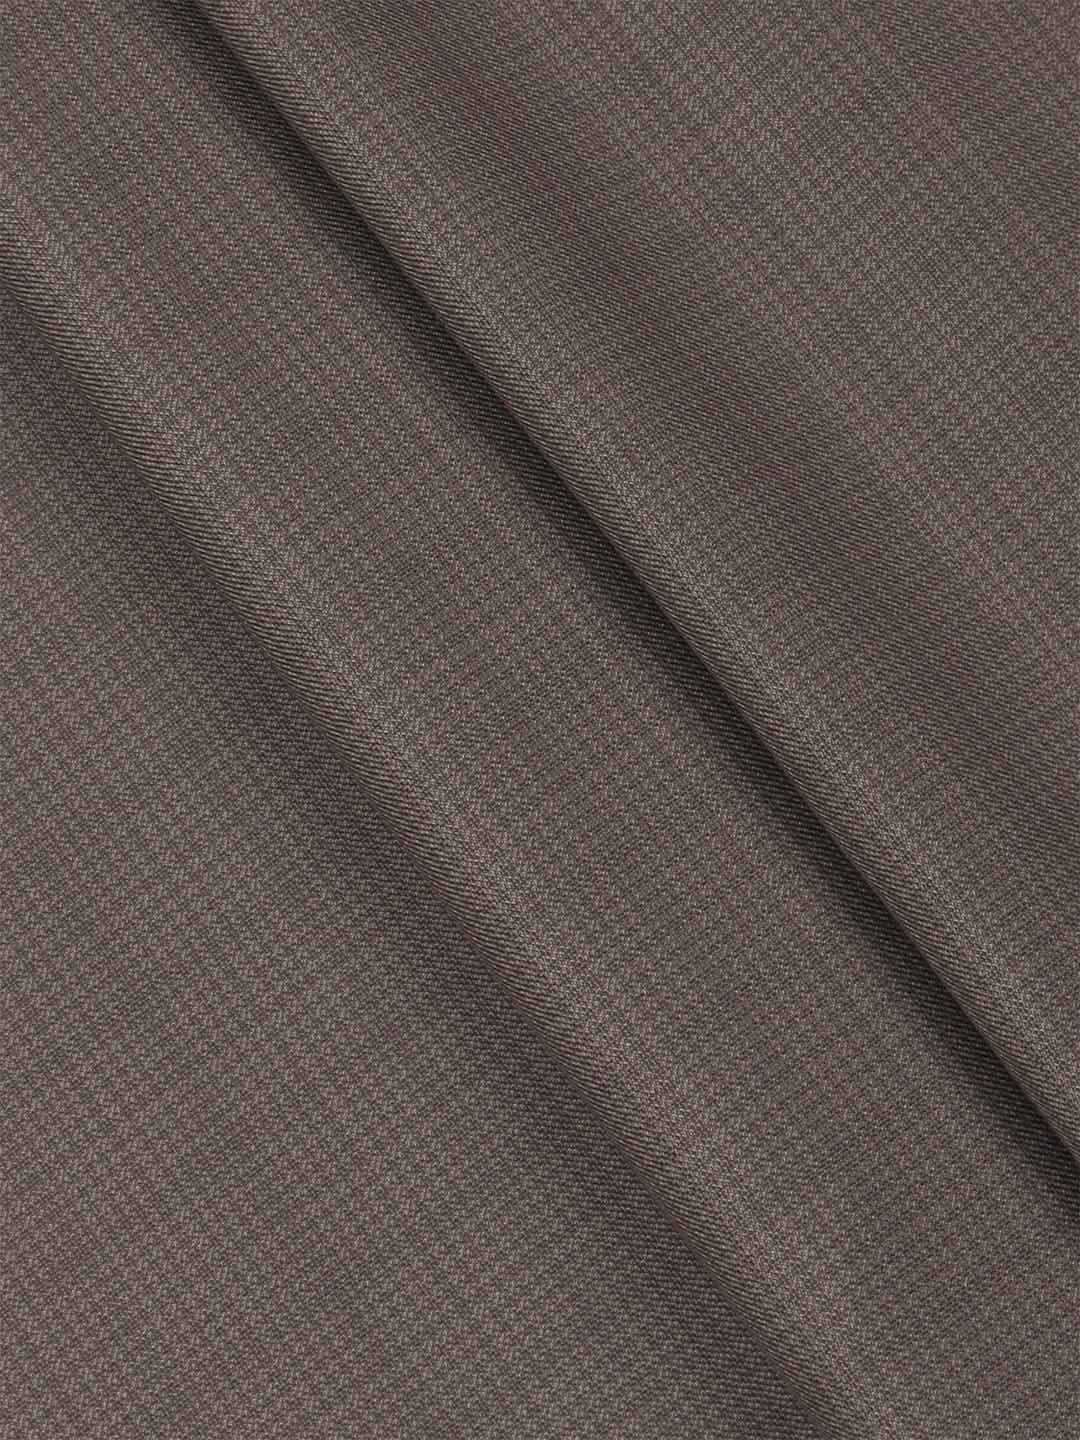 Cotton Blended Grey Colour Premium Suiting Fabric-Golden Days